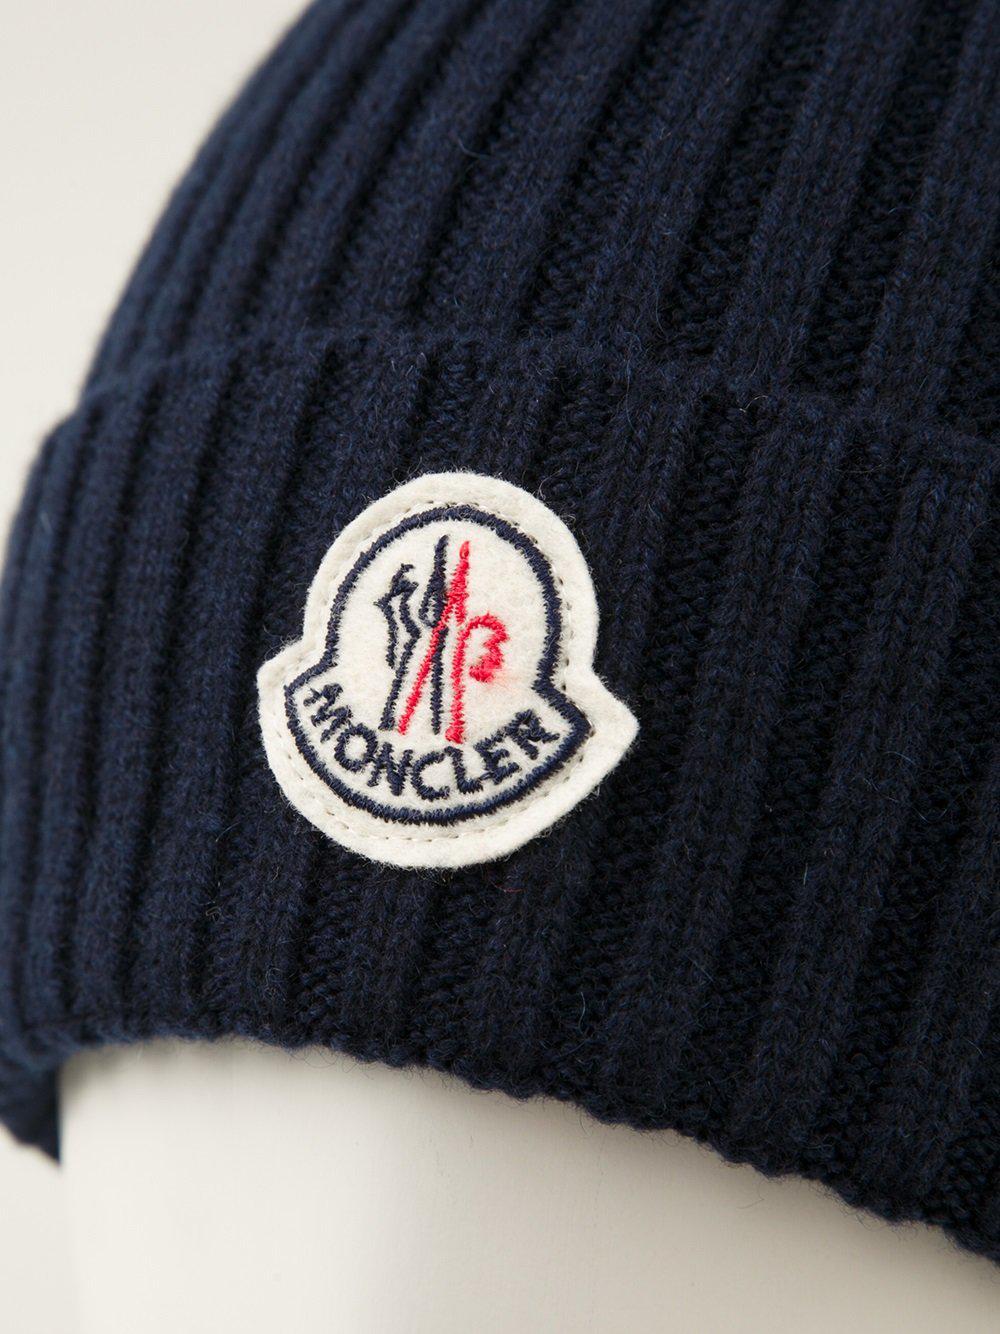 Moncler Cashmere Ribbed Hat in Blue for Men - Lyst